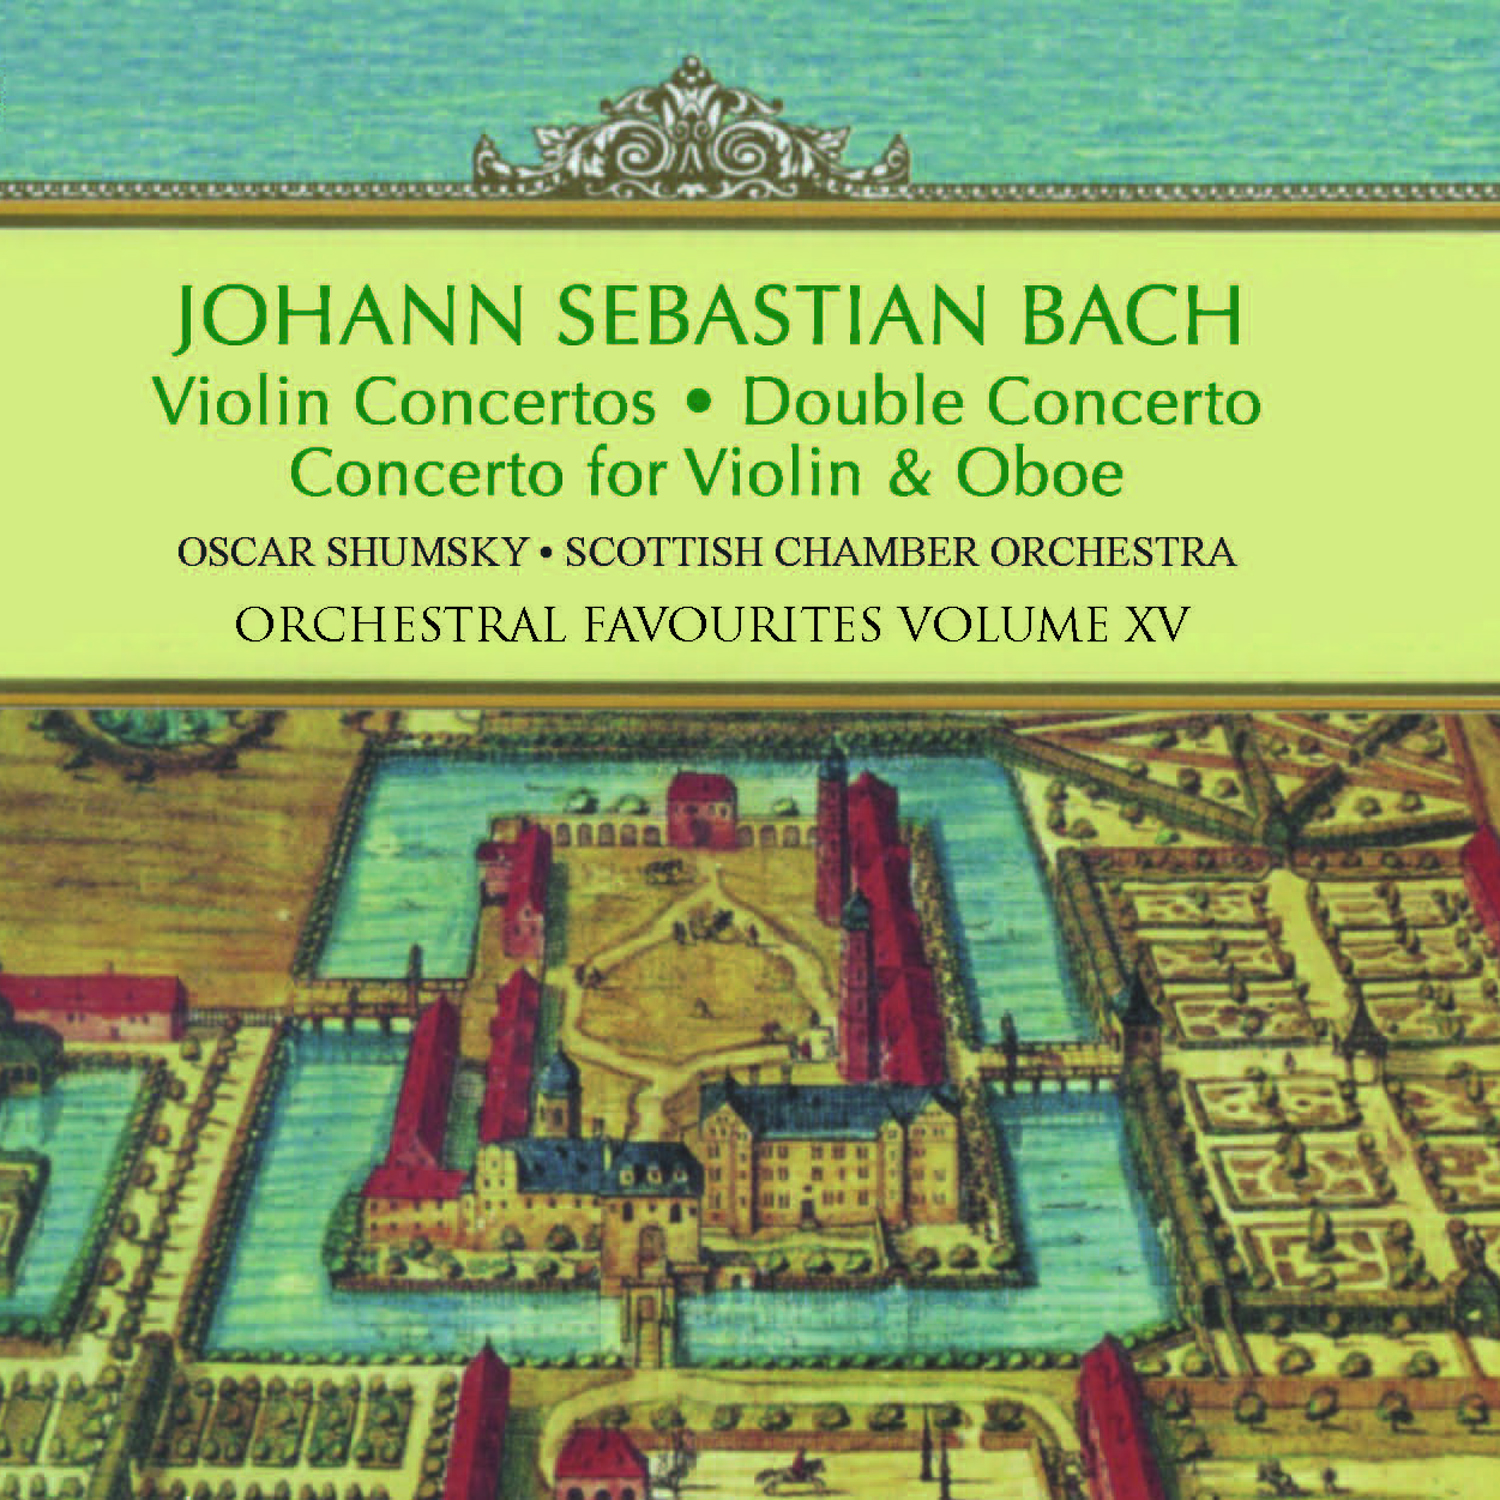 Concerto for Two Violins in D Minor, BWV 1043: I. Vivace